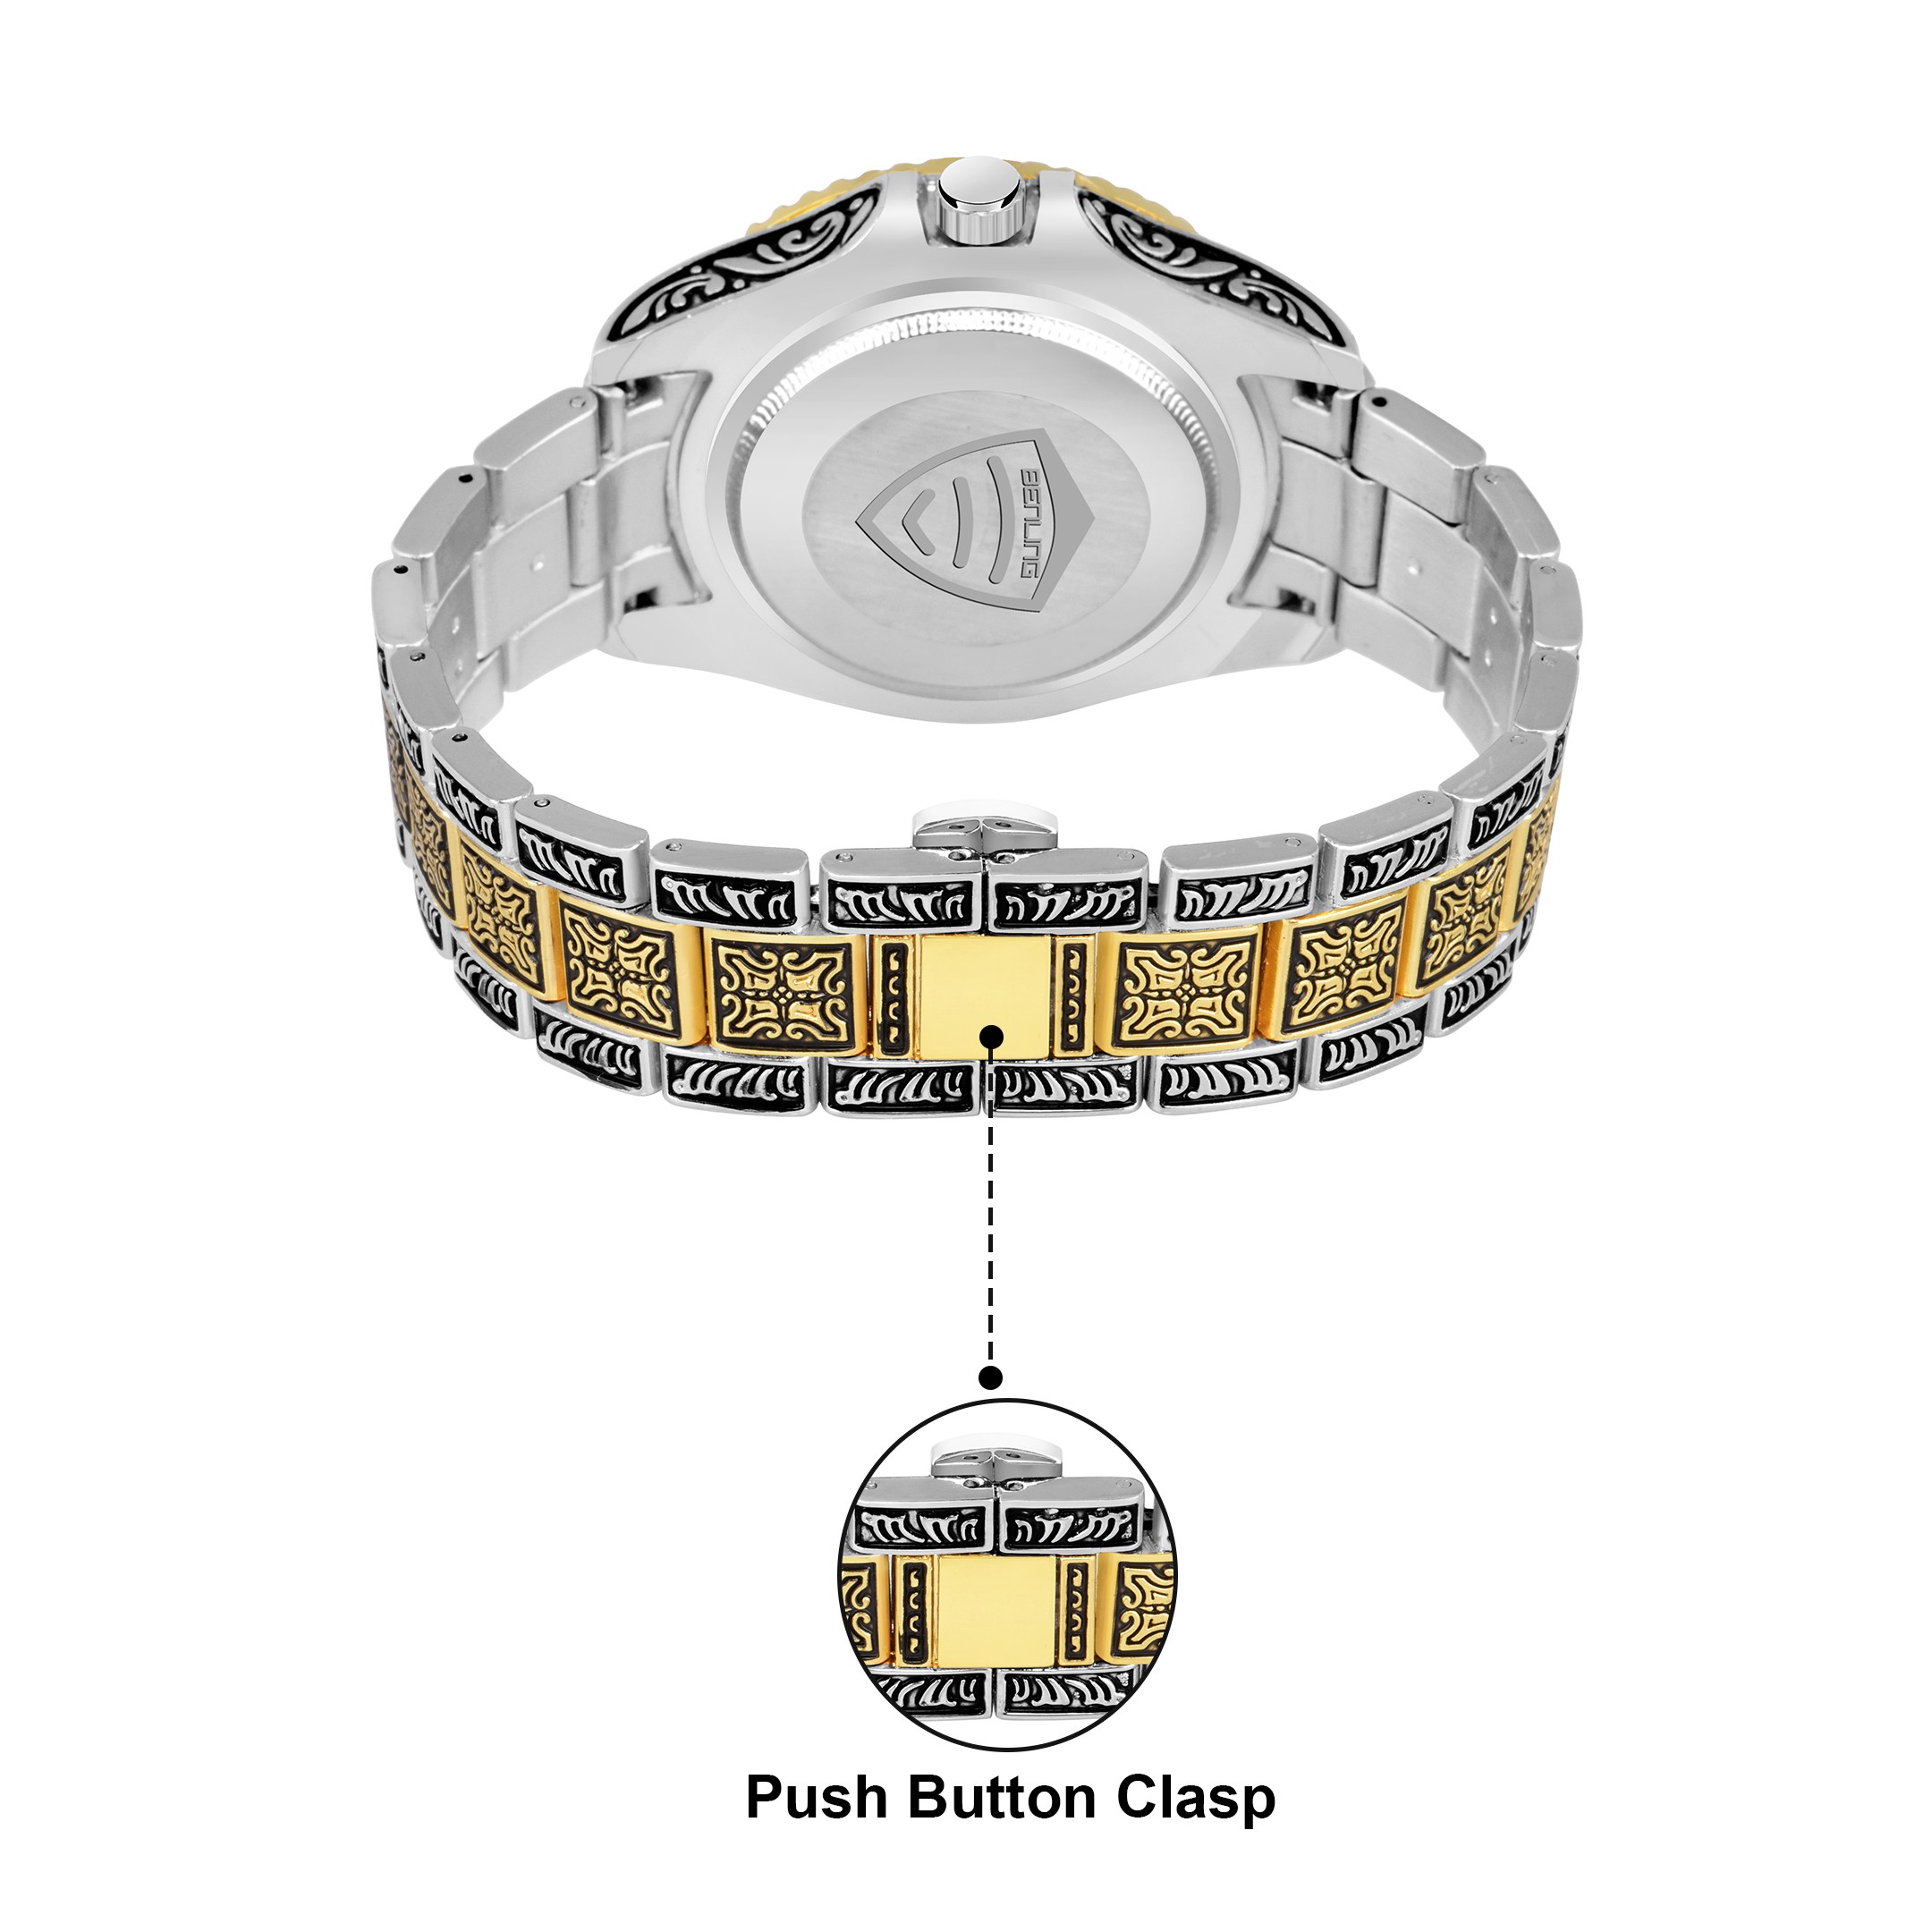 Buy Men's Watch - Thin Minimalist 42mm Large Dial Watch - Modern Fashion  Men's Unisex Dress Watch - Double Strap Dark Style Watch at Amazon.in